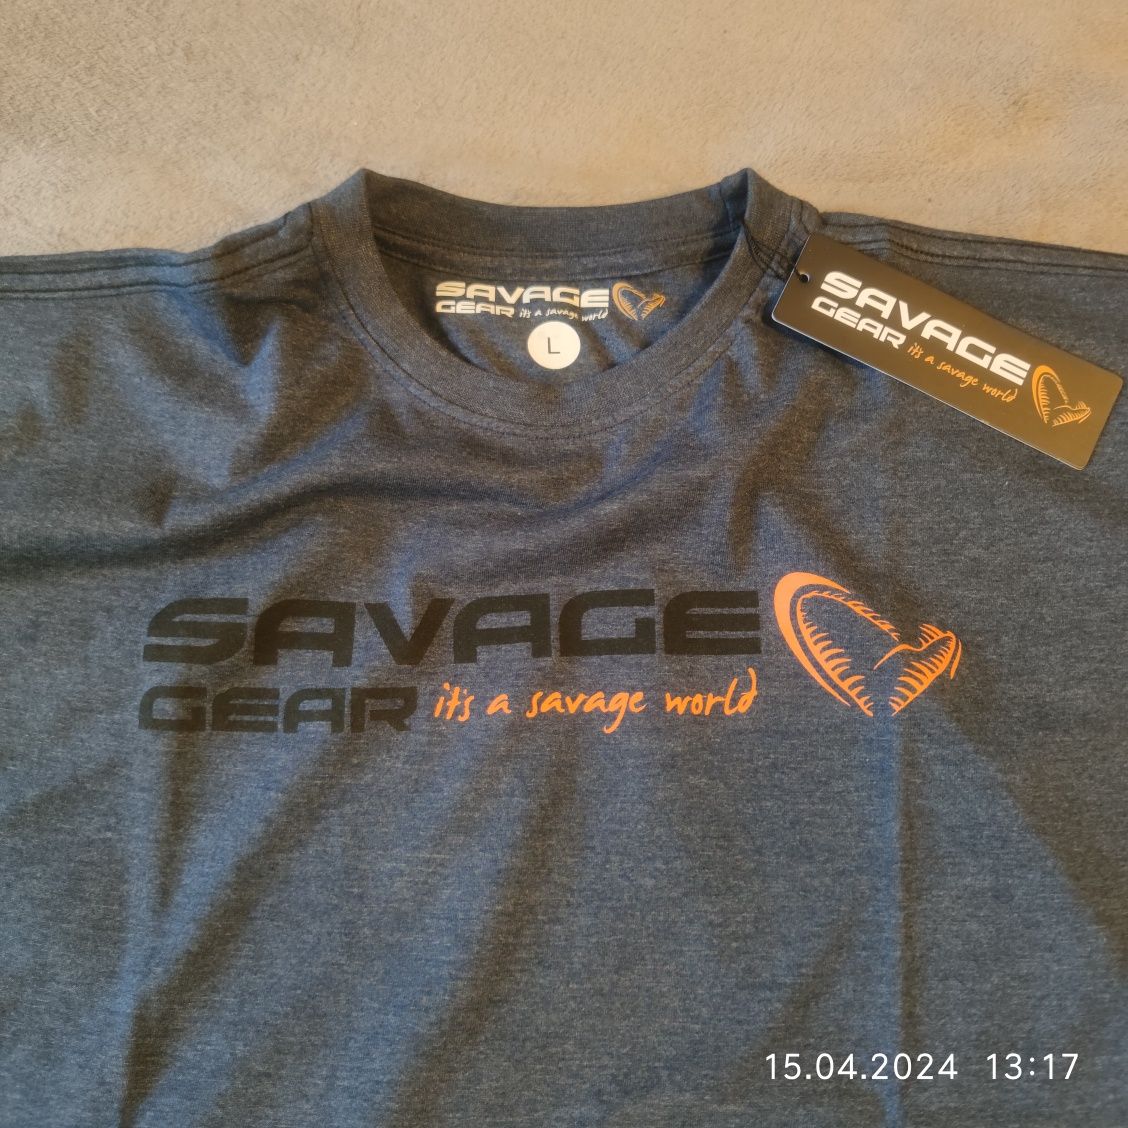 Футболка Savage Gear Signature Logo T- Shirt - L